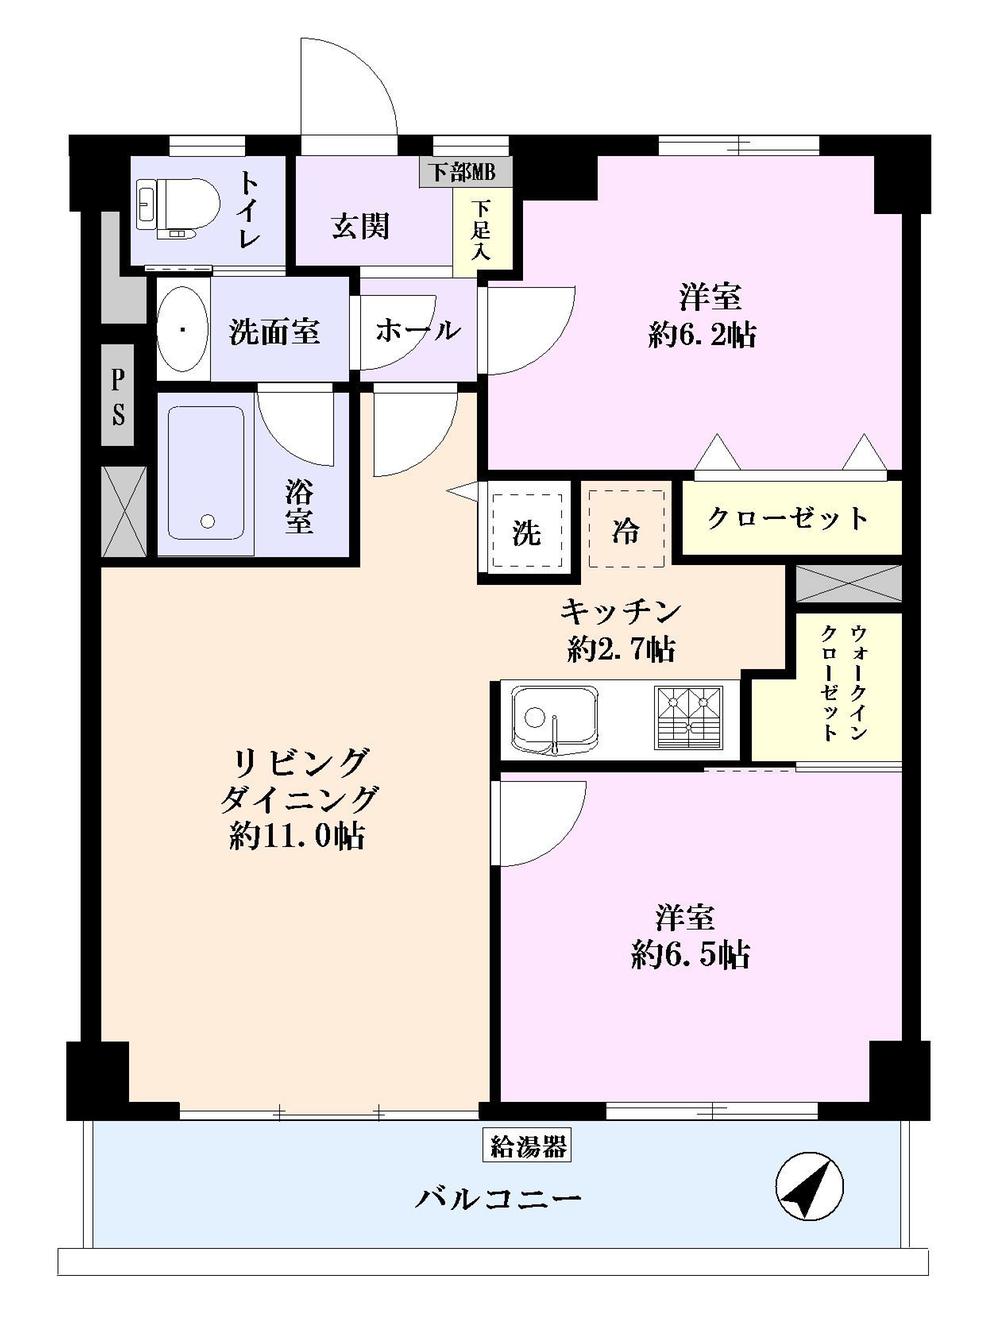 Floor plan. 2LDK, Price 32,800,000 yen, Footprint 57.6 sq m , Balcony area 8.64 sq m